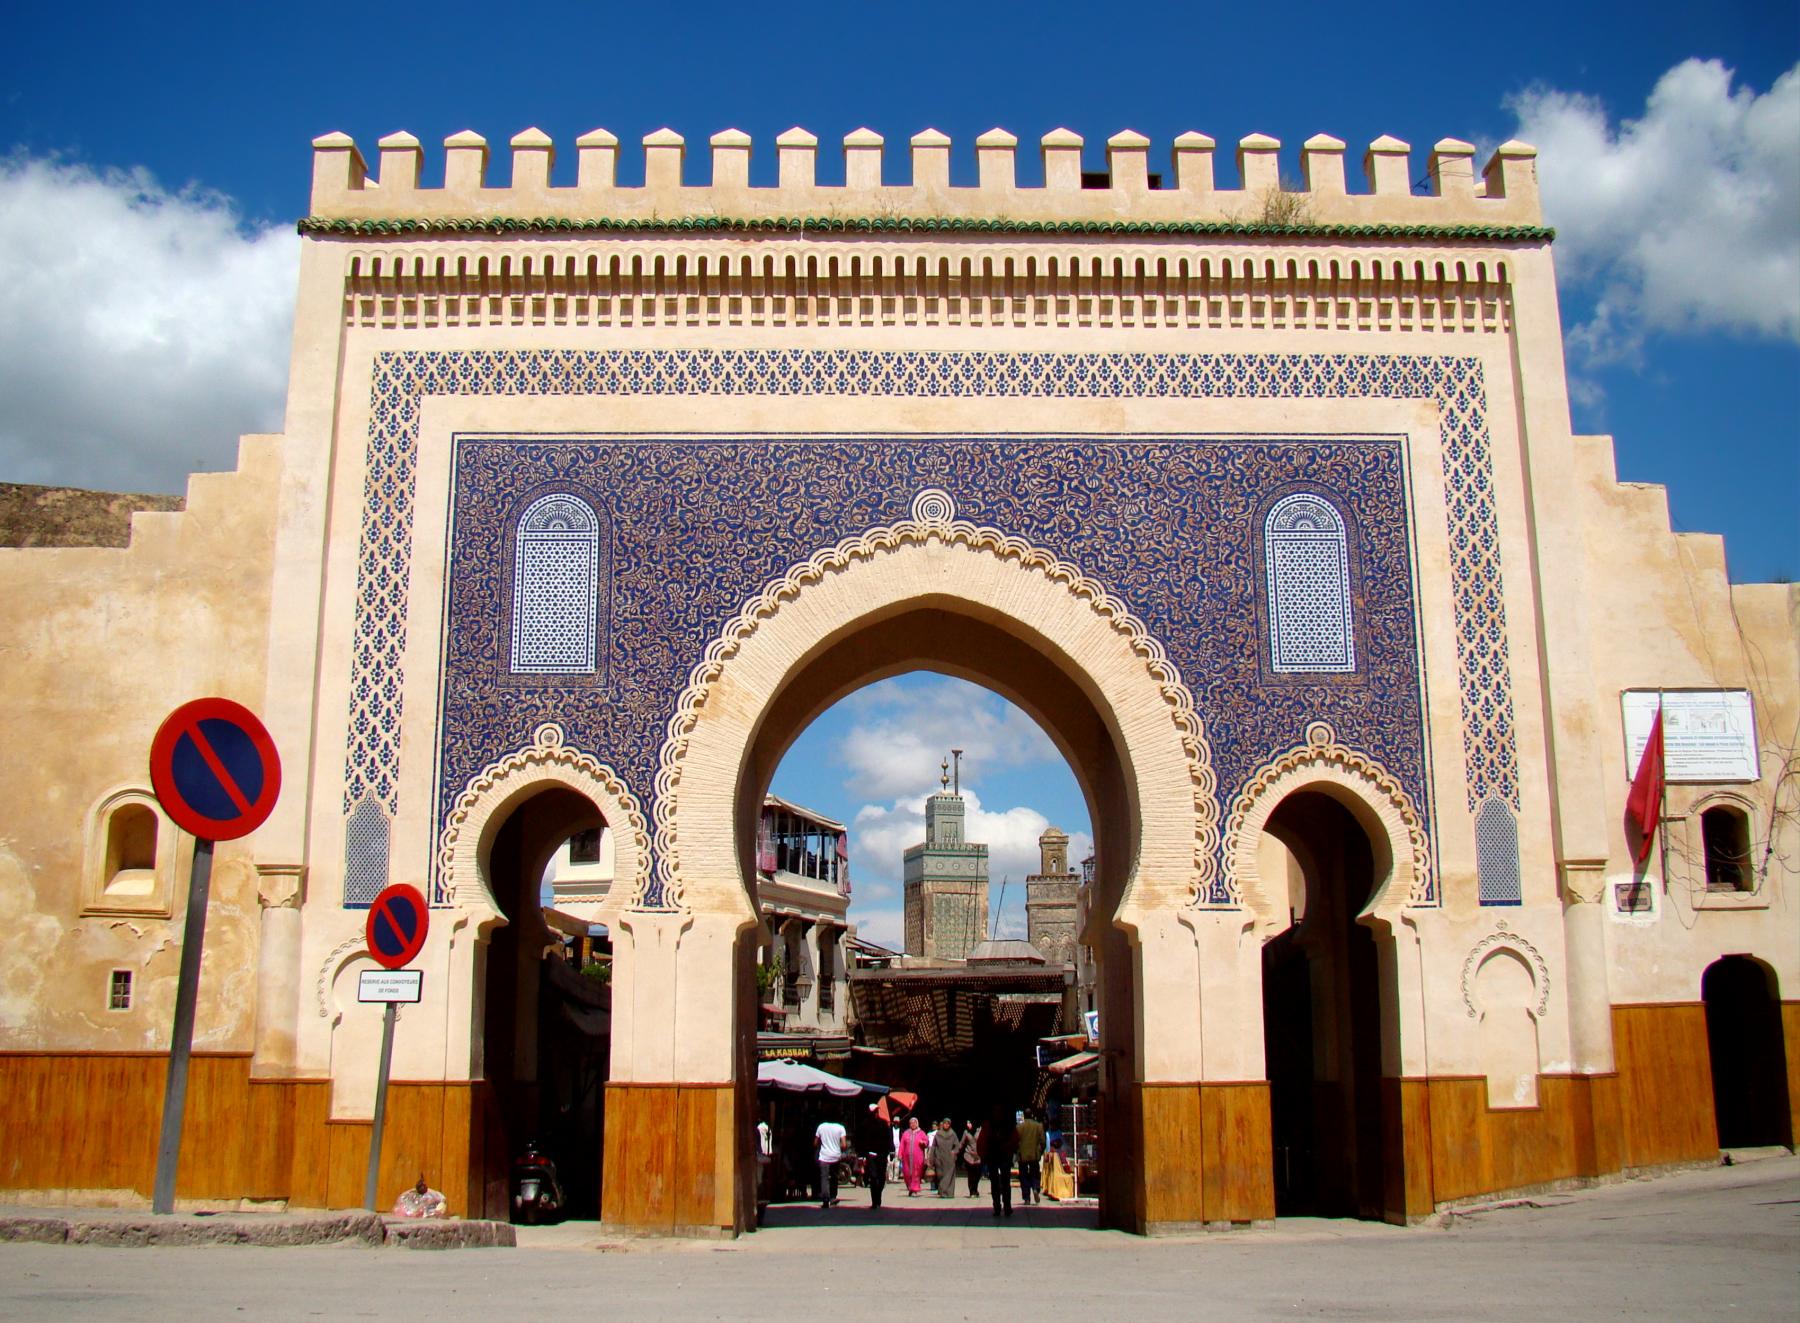 fes medina guided tour - Bab Bou Jeloud